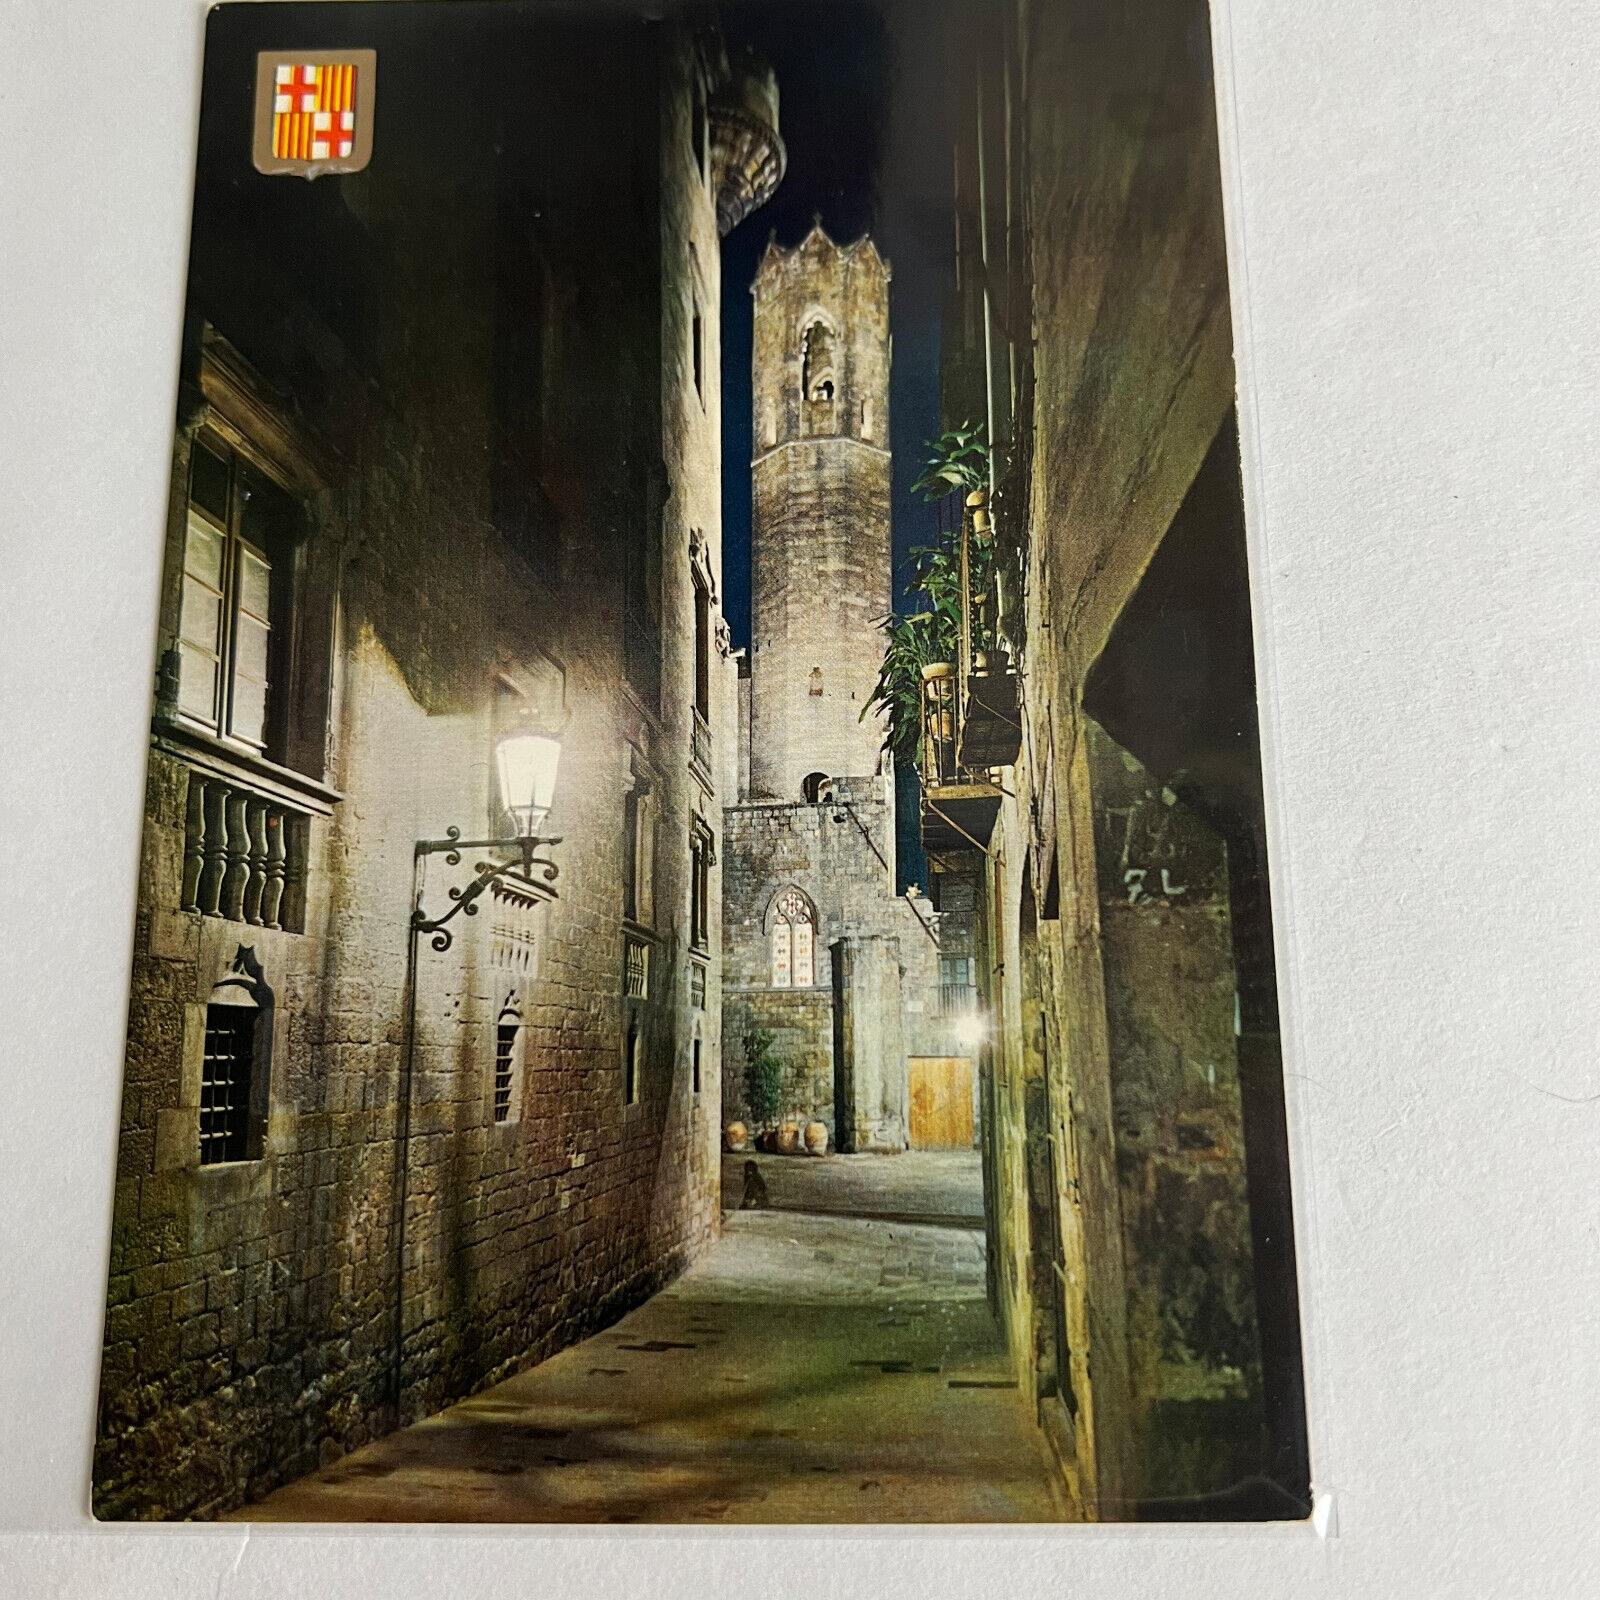 Barcelona Gothic Quarter at Night Postcard